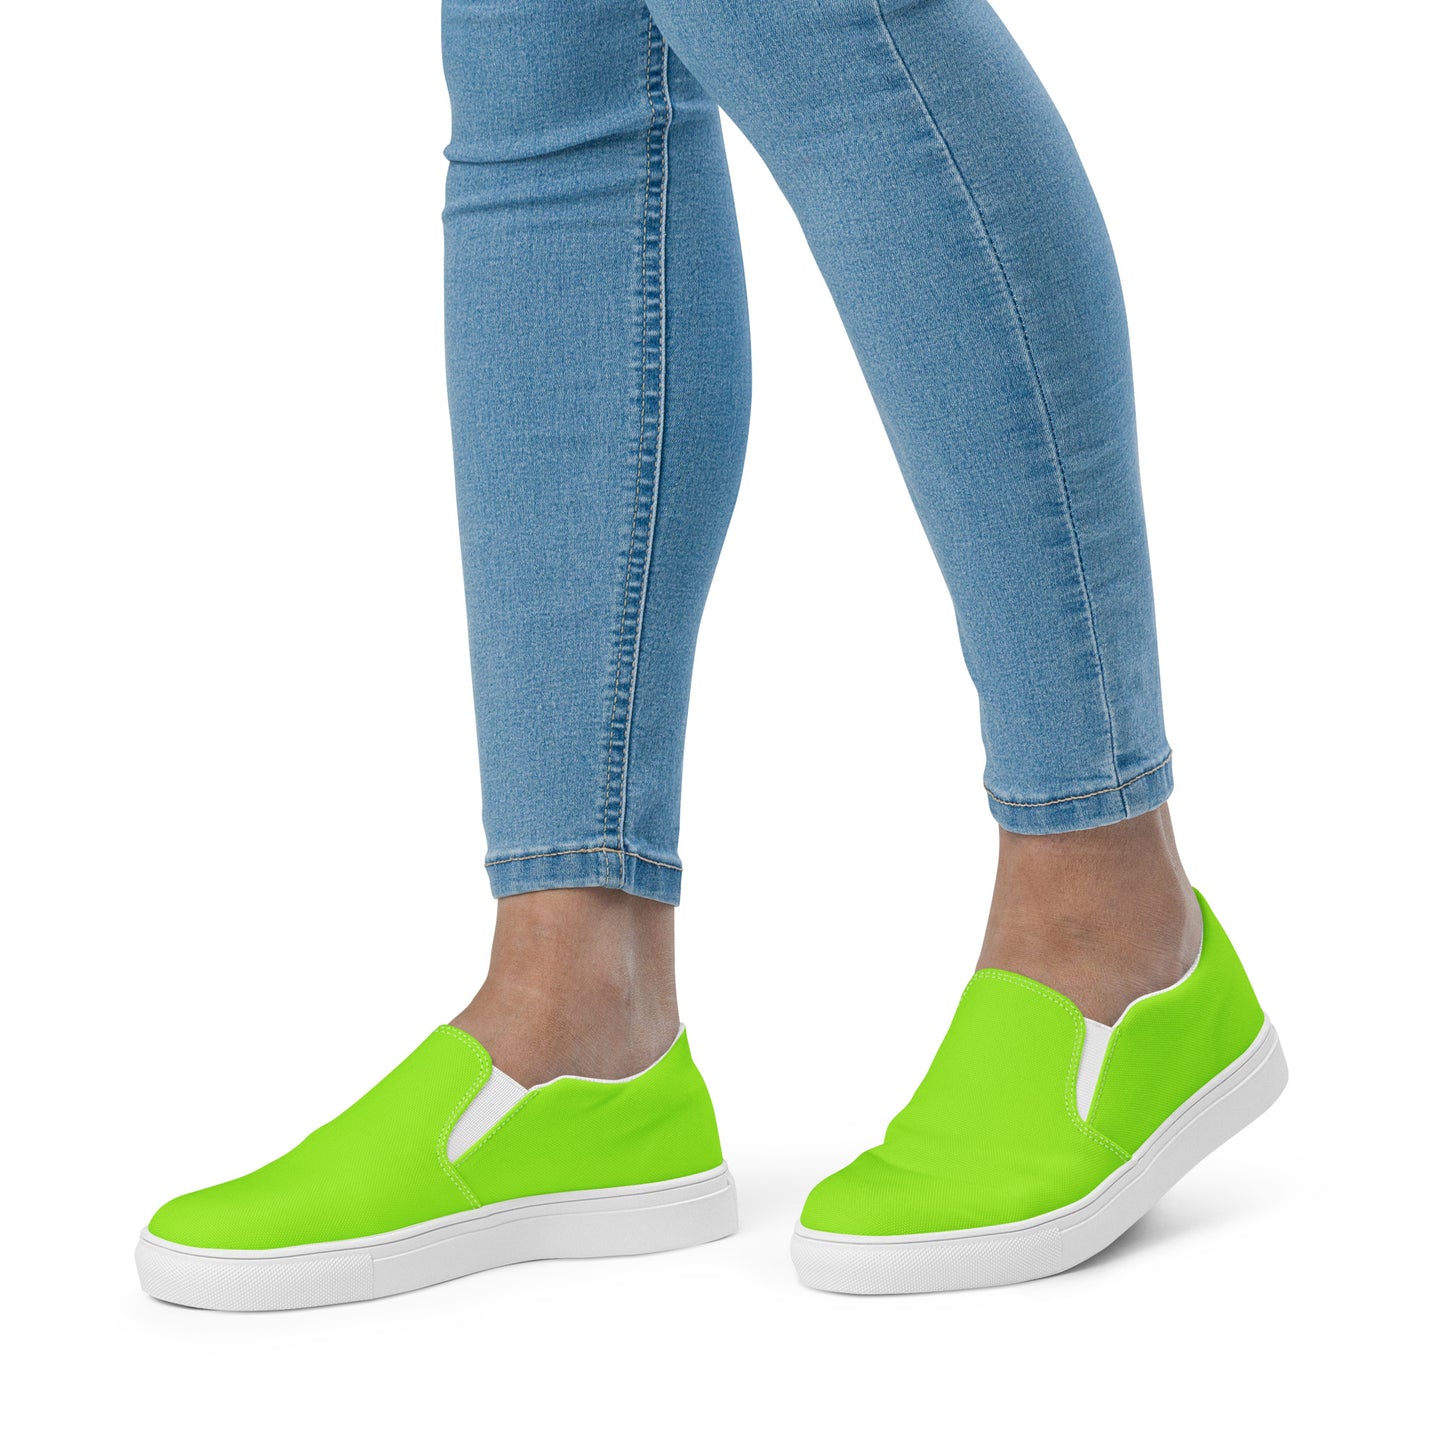 Lemon Lime - Women’s slip-on canvas shoes